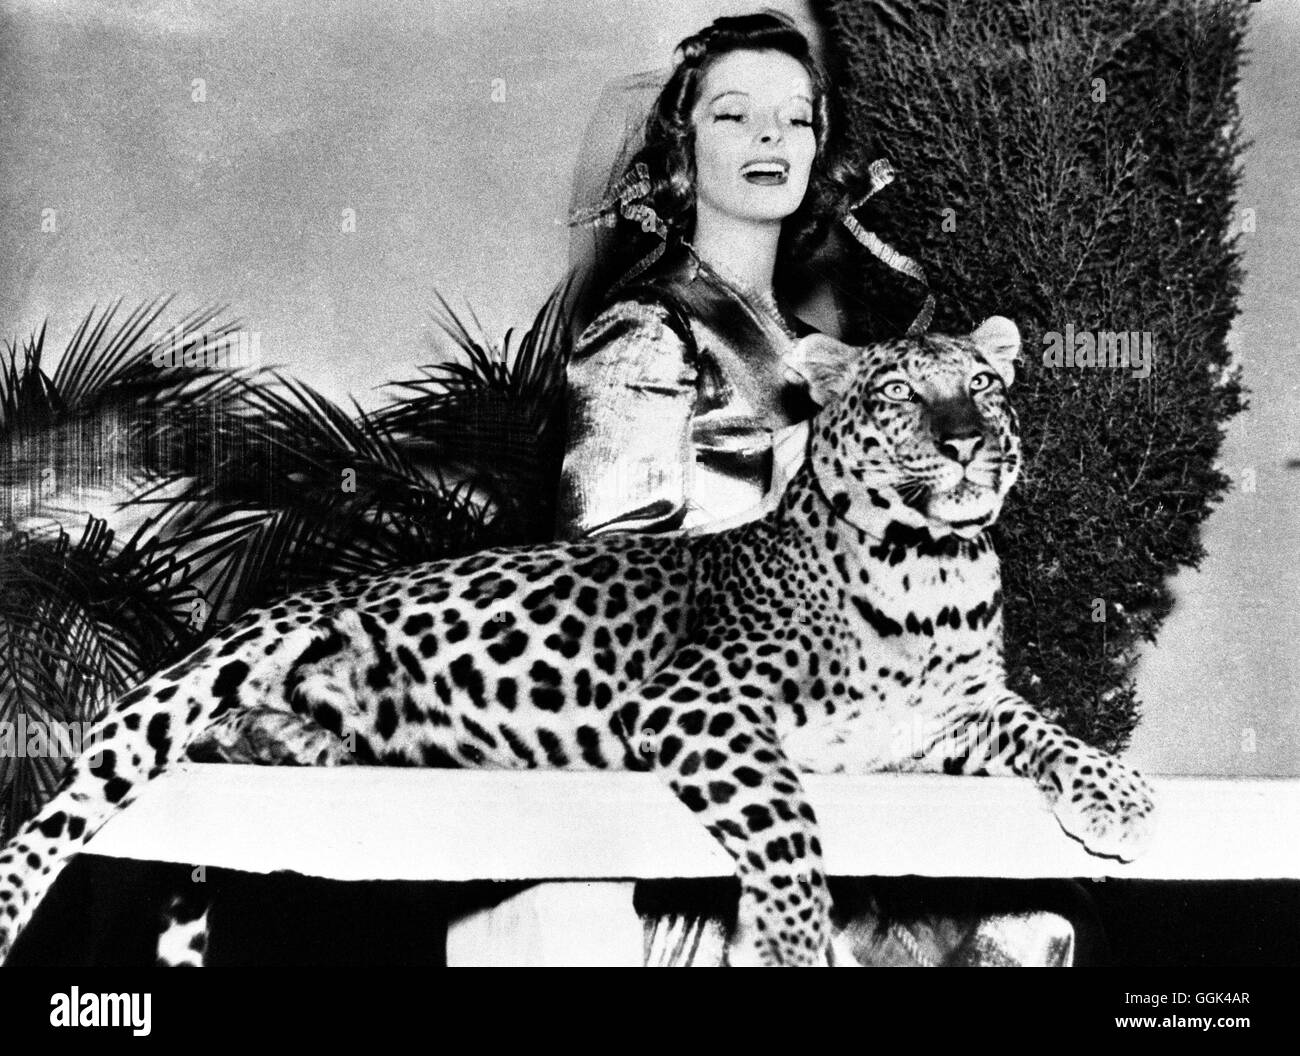 LEOPARDEN KÜSST man nicht portando il Bimbo USA 1938 - Howard Hawks Katharine Hepburn als Susan Vance mit Leopard 'Baby', in 'Leoparden küßt man nicht', 1938. Regie: Howard Hawks Foto Stock